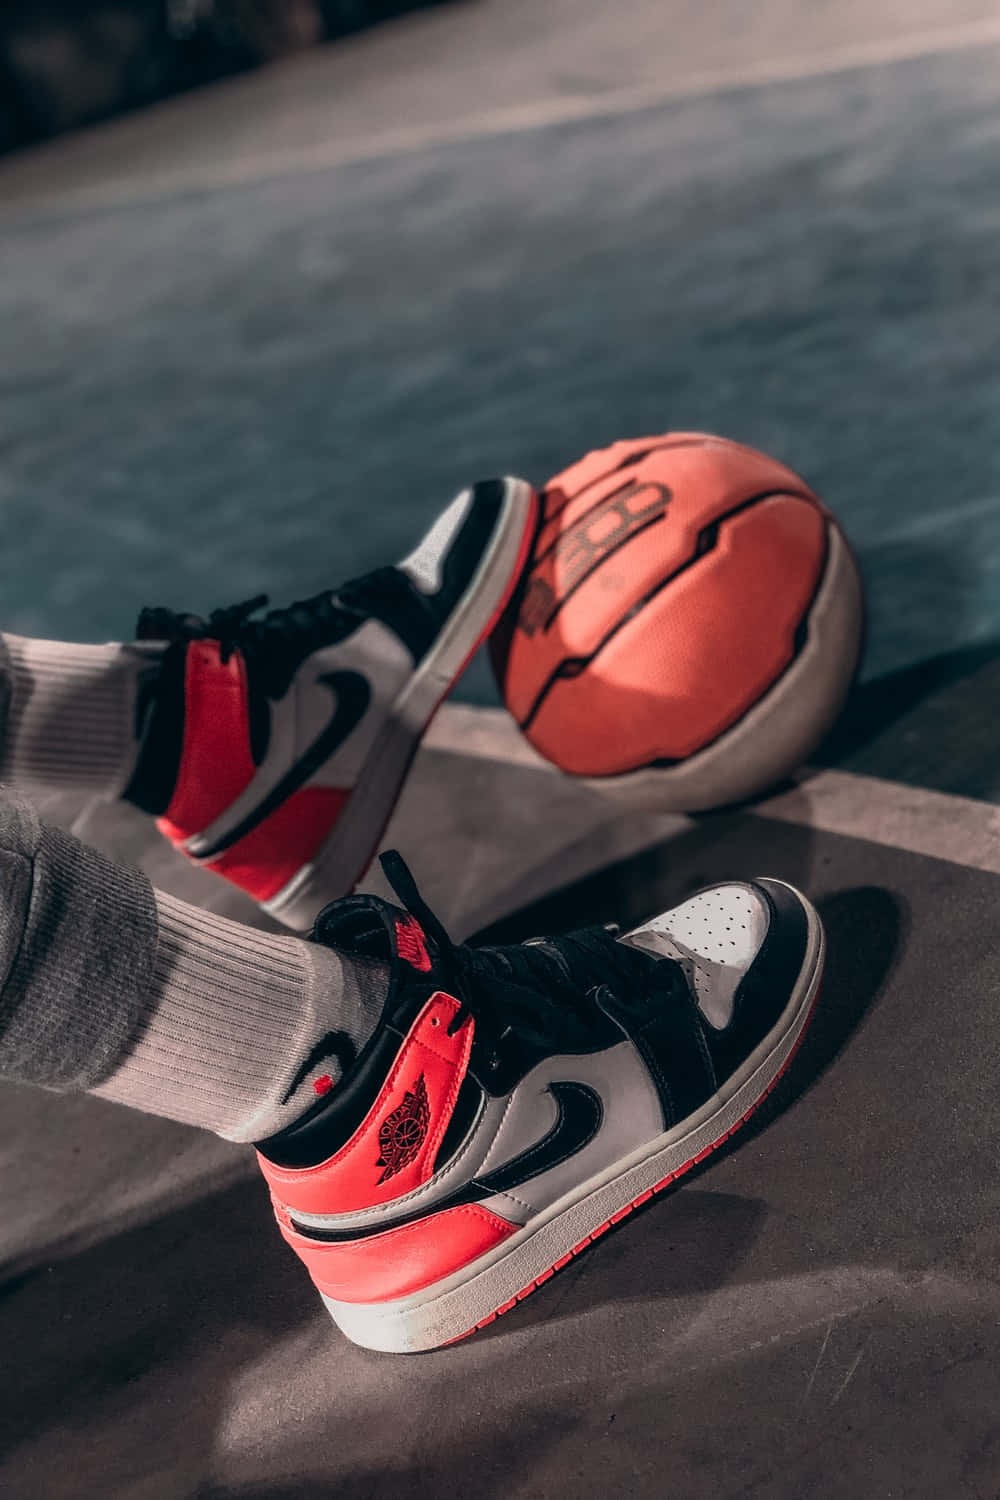 Røde Jordan sko på domstolen Wallpaper